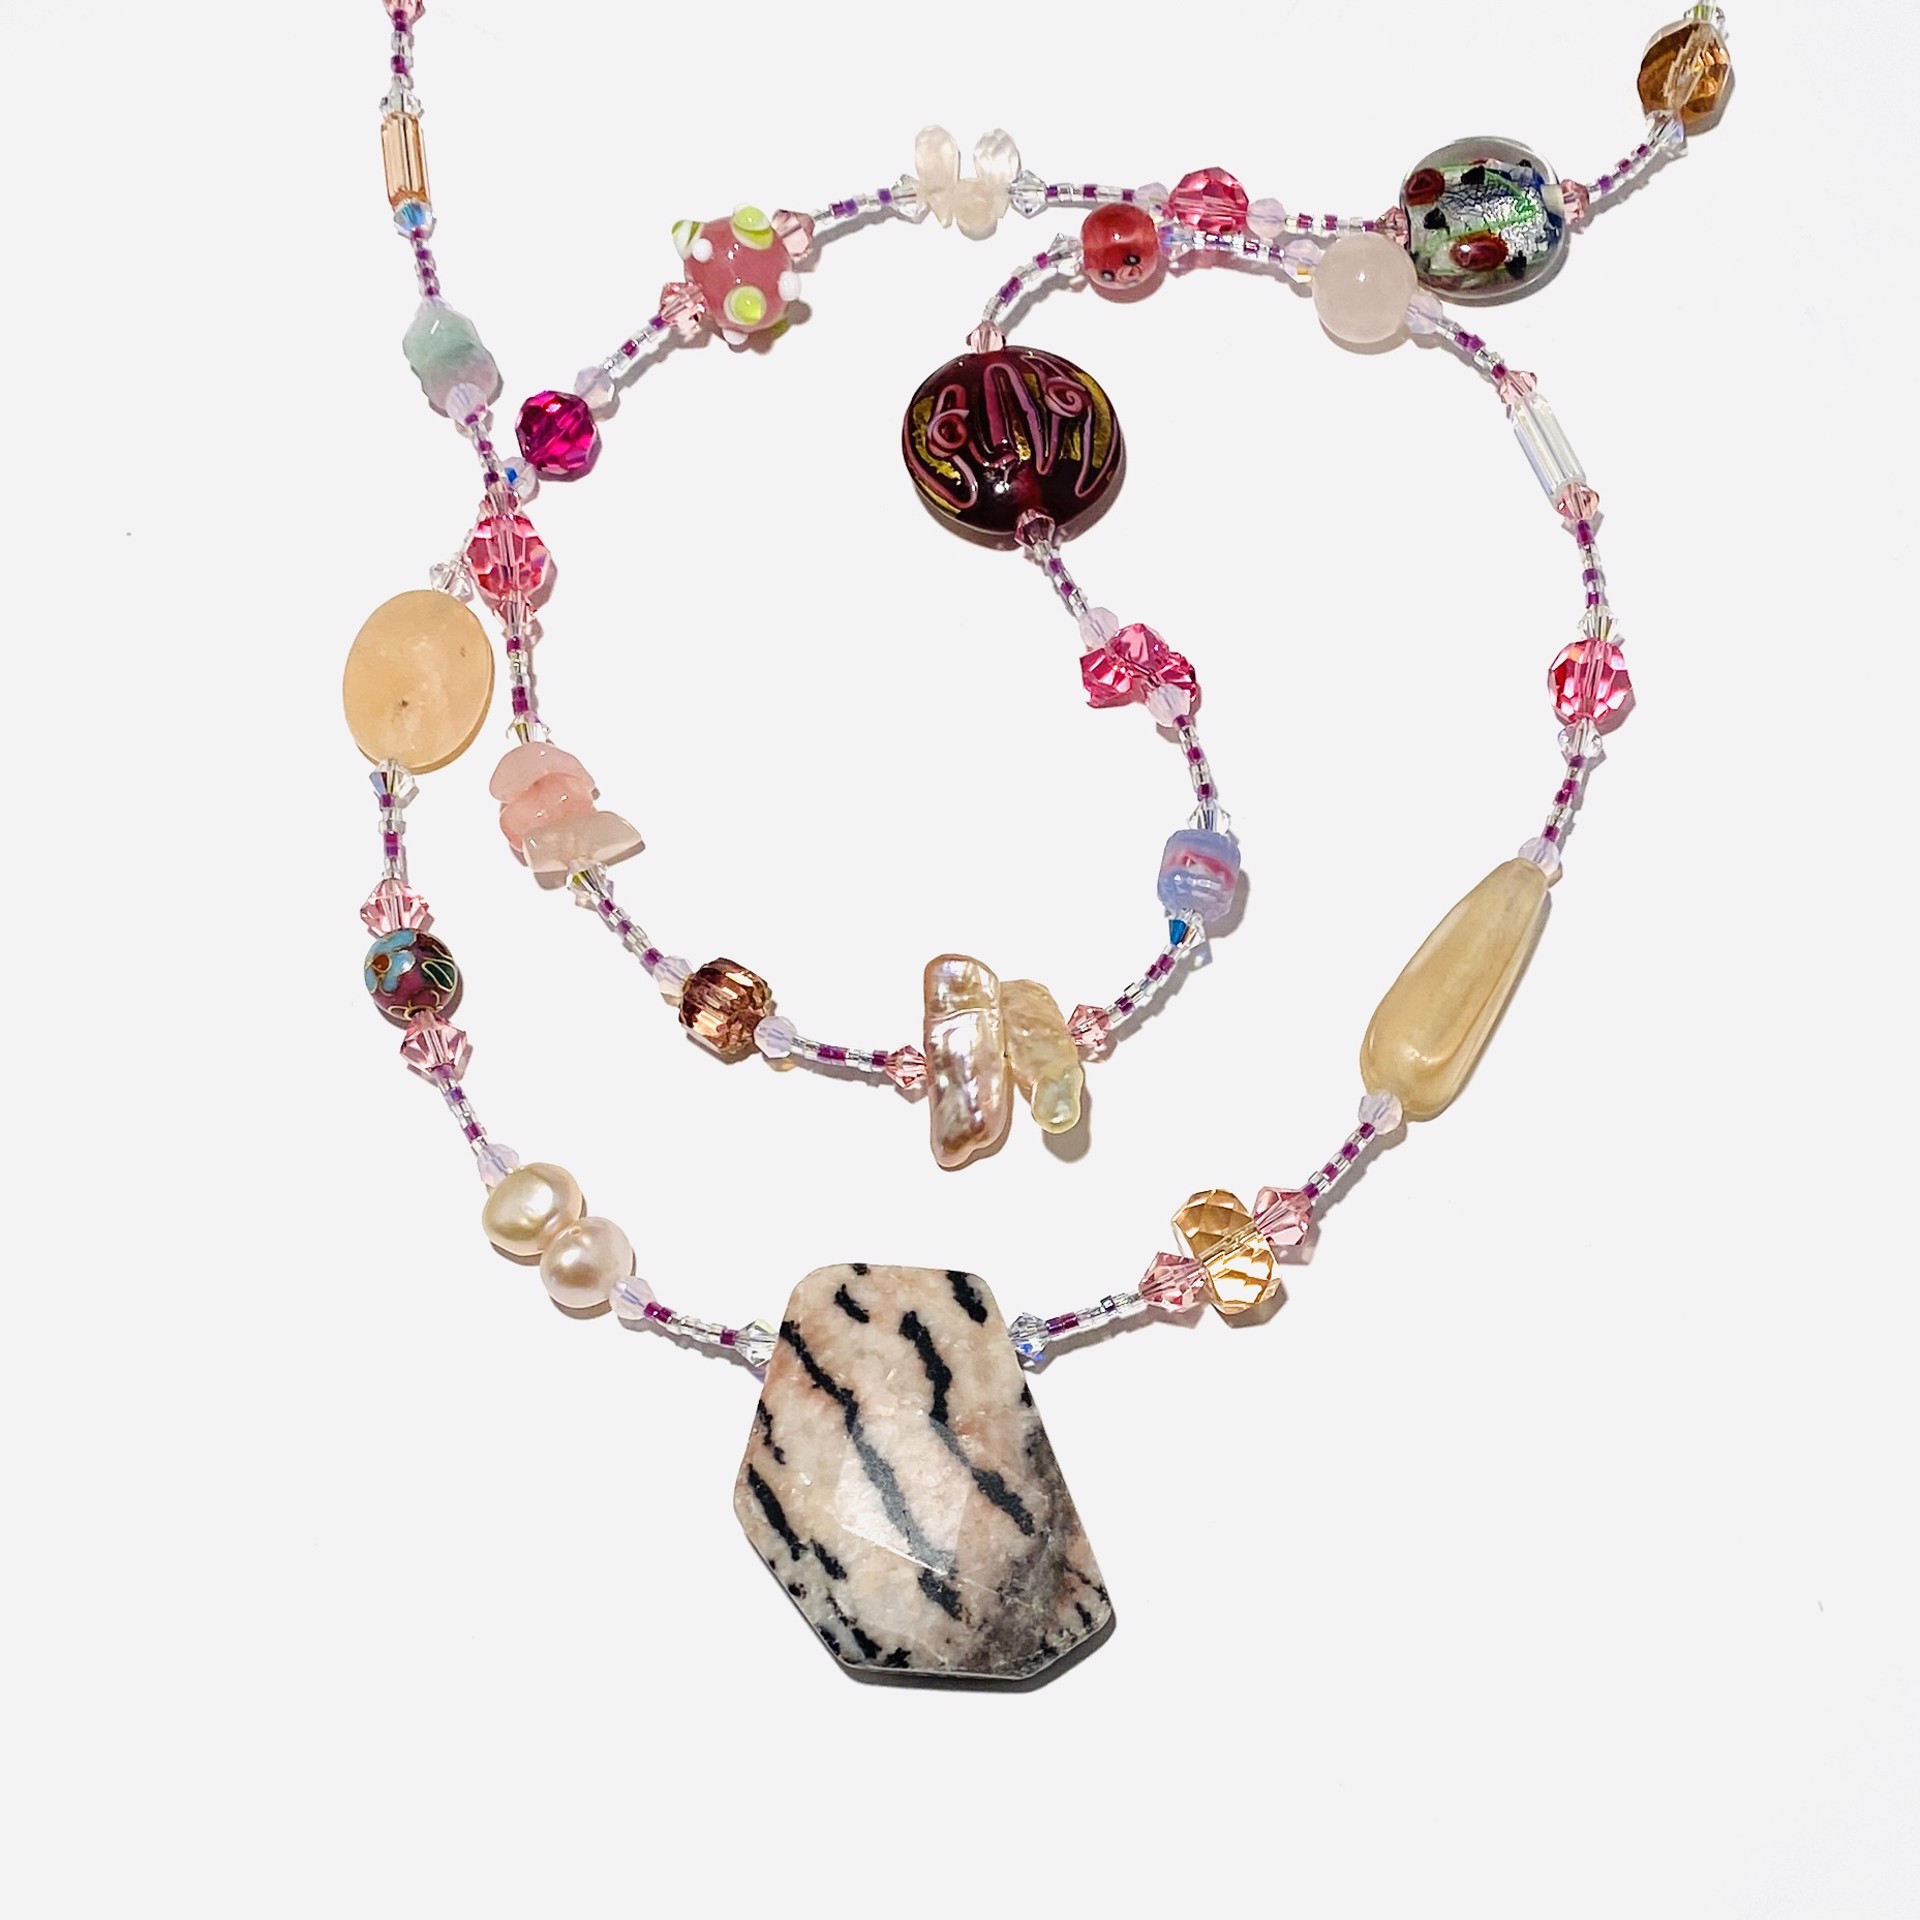 Stiletto in Pink 42” Necklace SHOSH23-6 by Shoshannah Weinisch